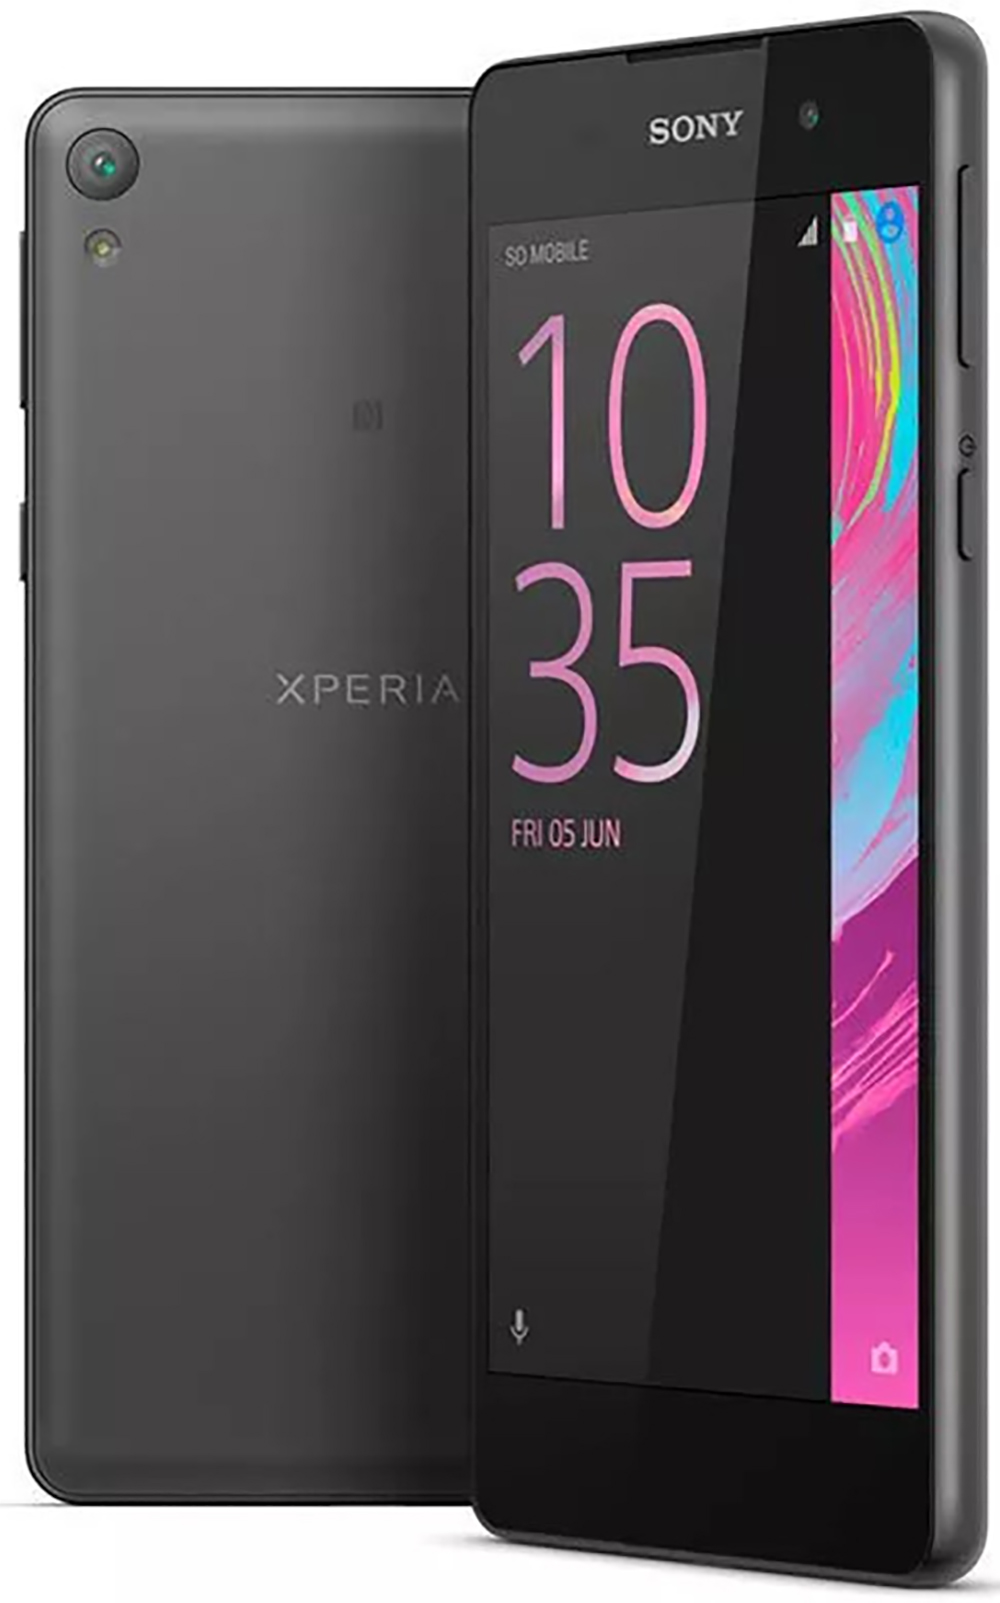 Sony Xperia E5 F3313 16GB Unlocked GSM 4G LTE Phone w/ 13MP Camera - Black - image 1 of 4